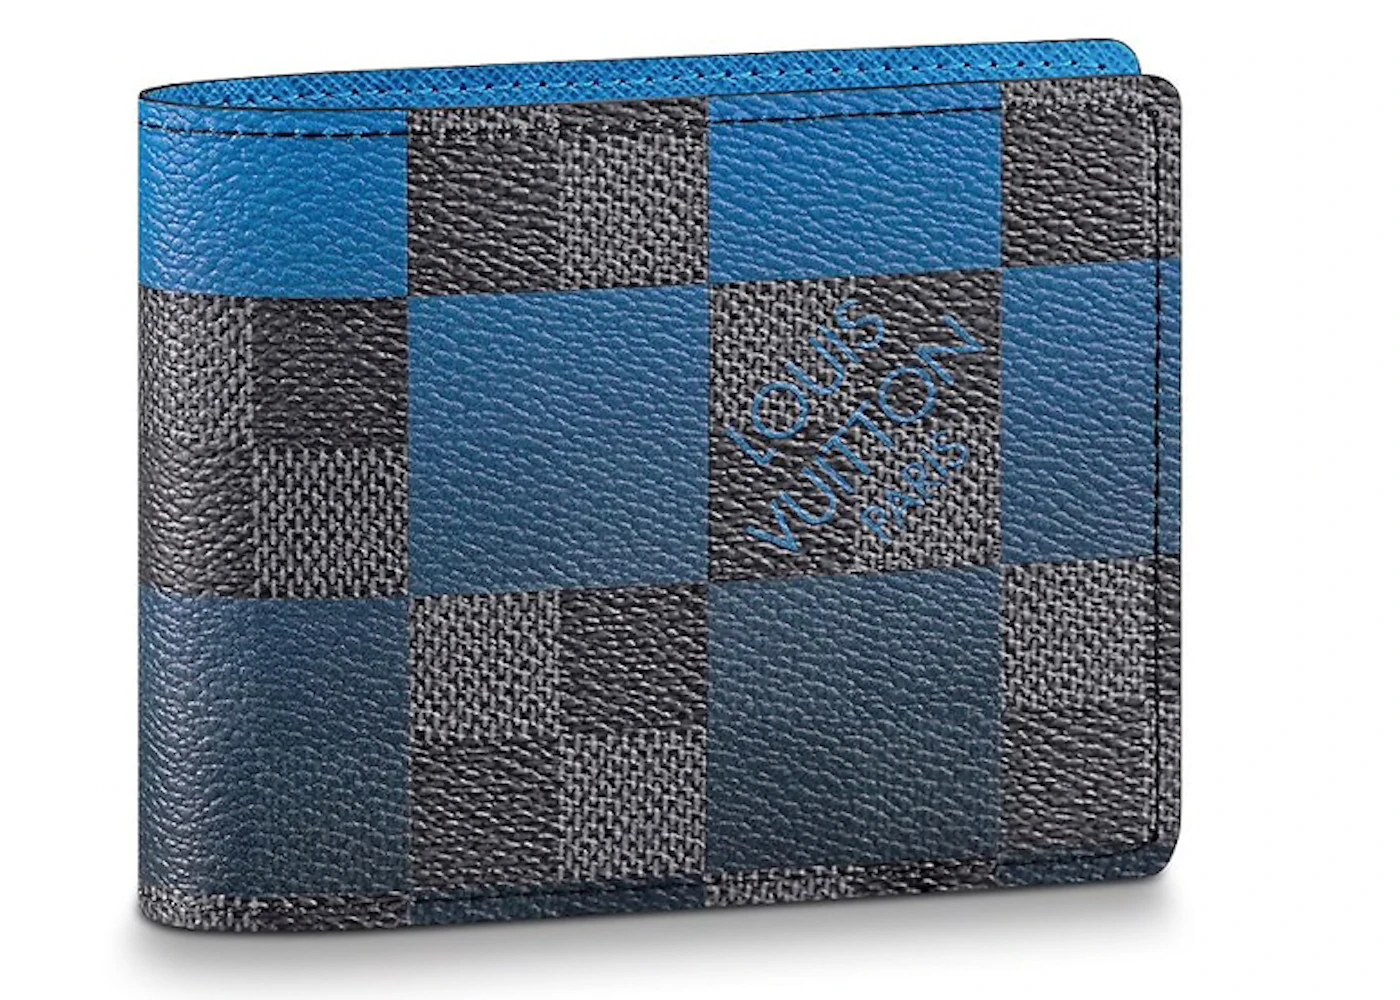 Louis Vuitton Multiple Wallet Damier Graphite Giant (3 Card Slot) Blue in  Coated Canvas - US